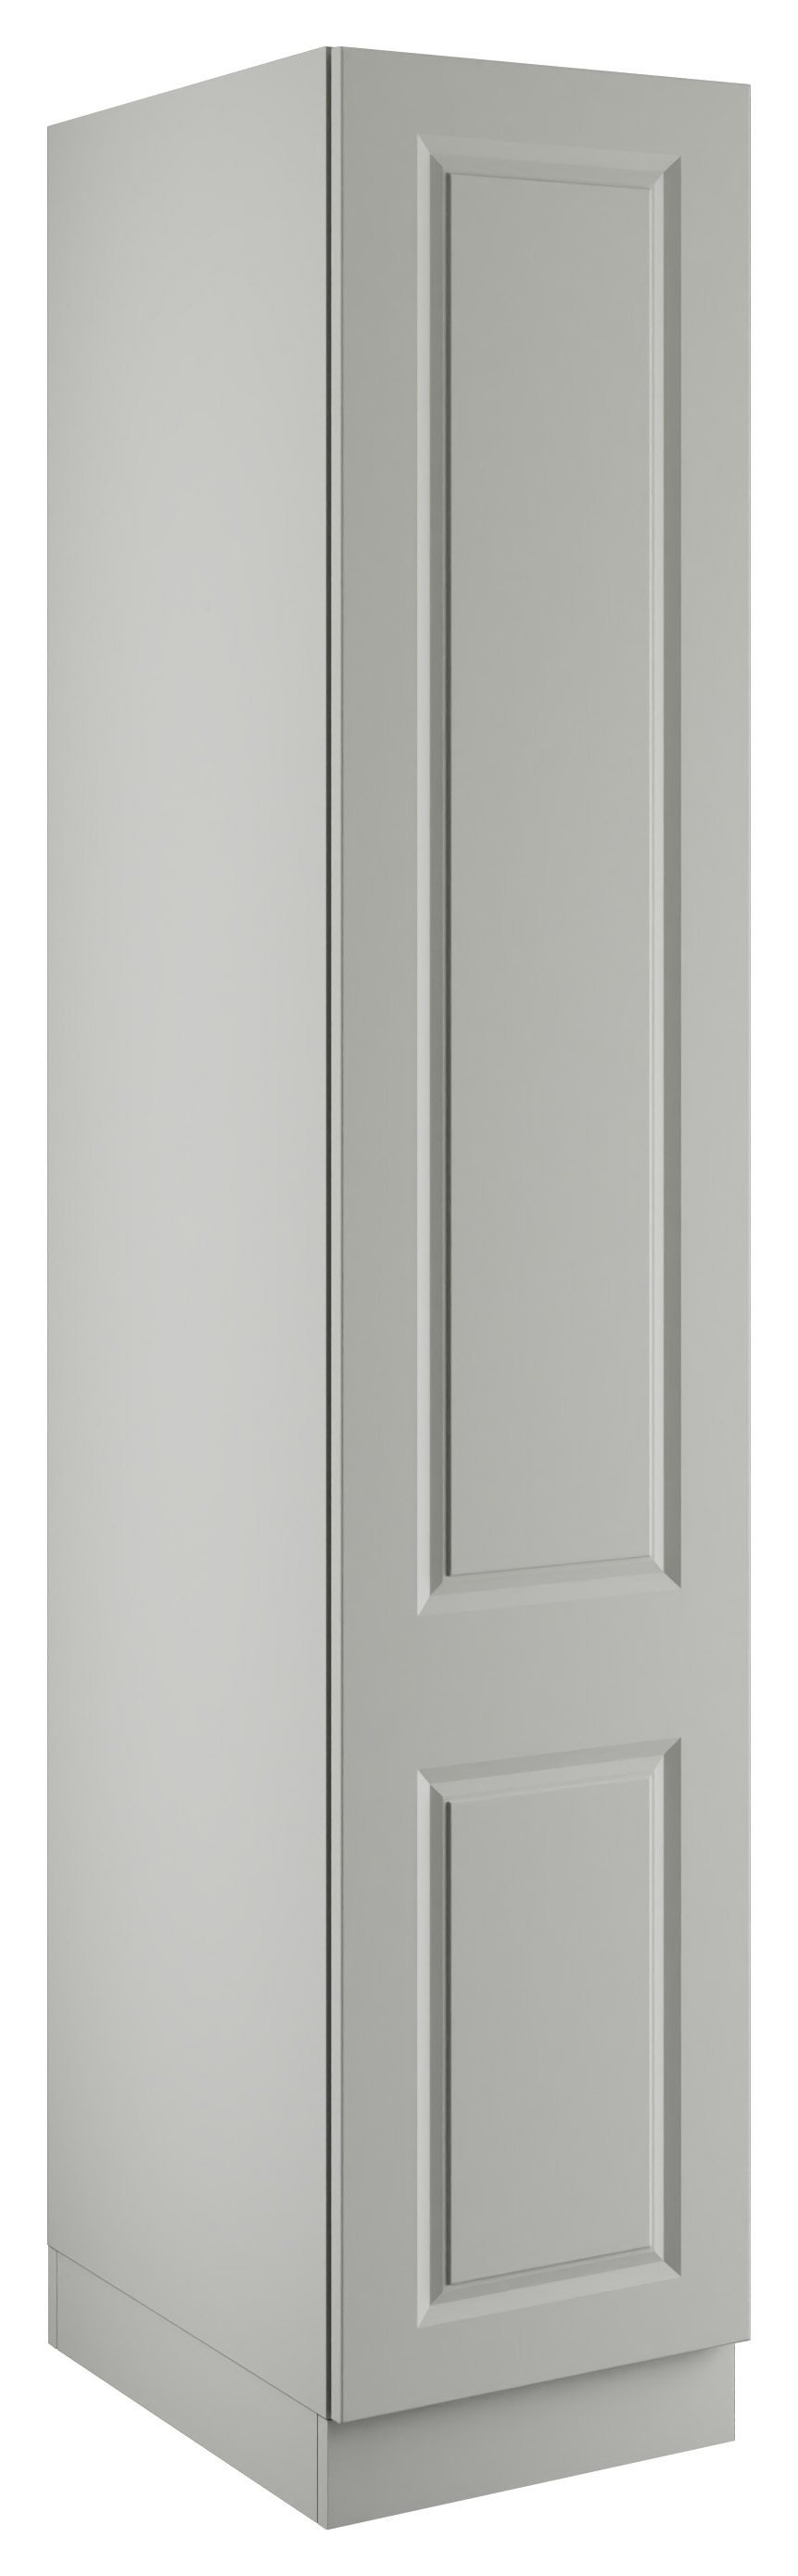 Harrogate Light Grey Single Wardrobe with Shelves -